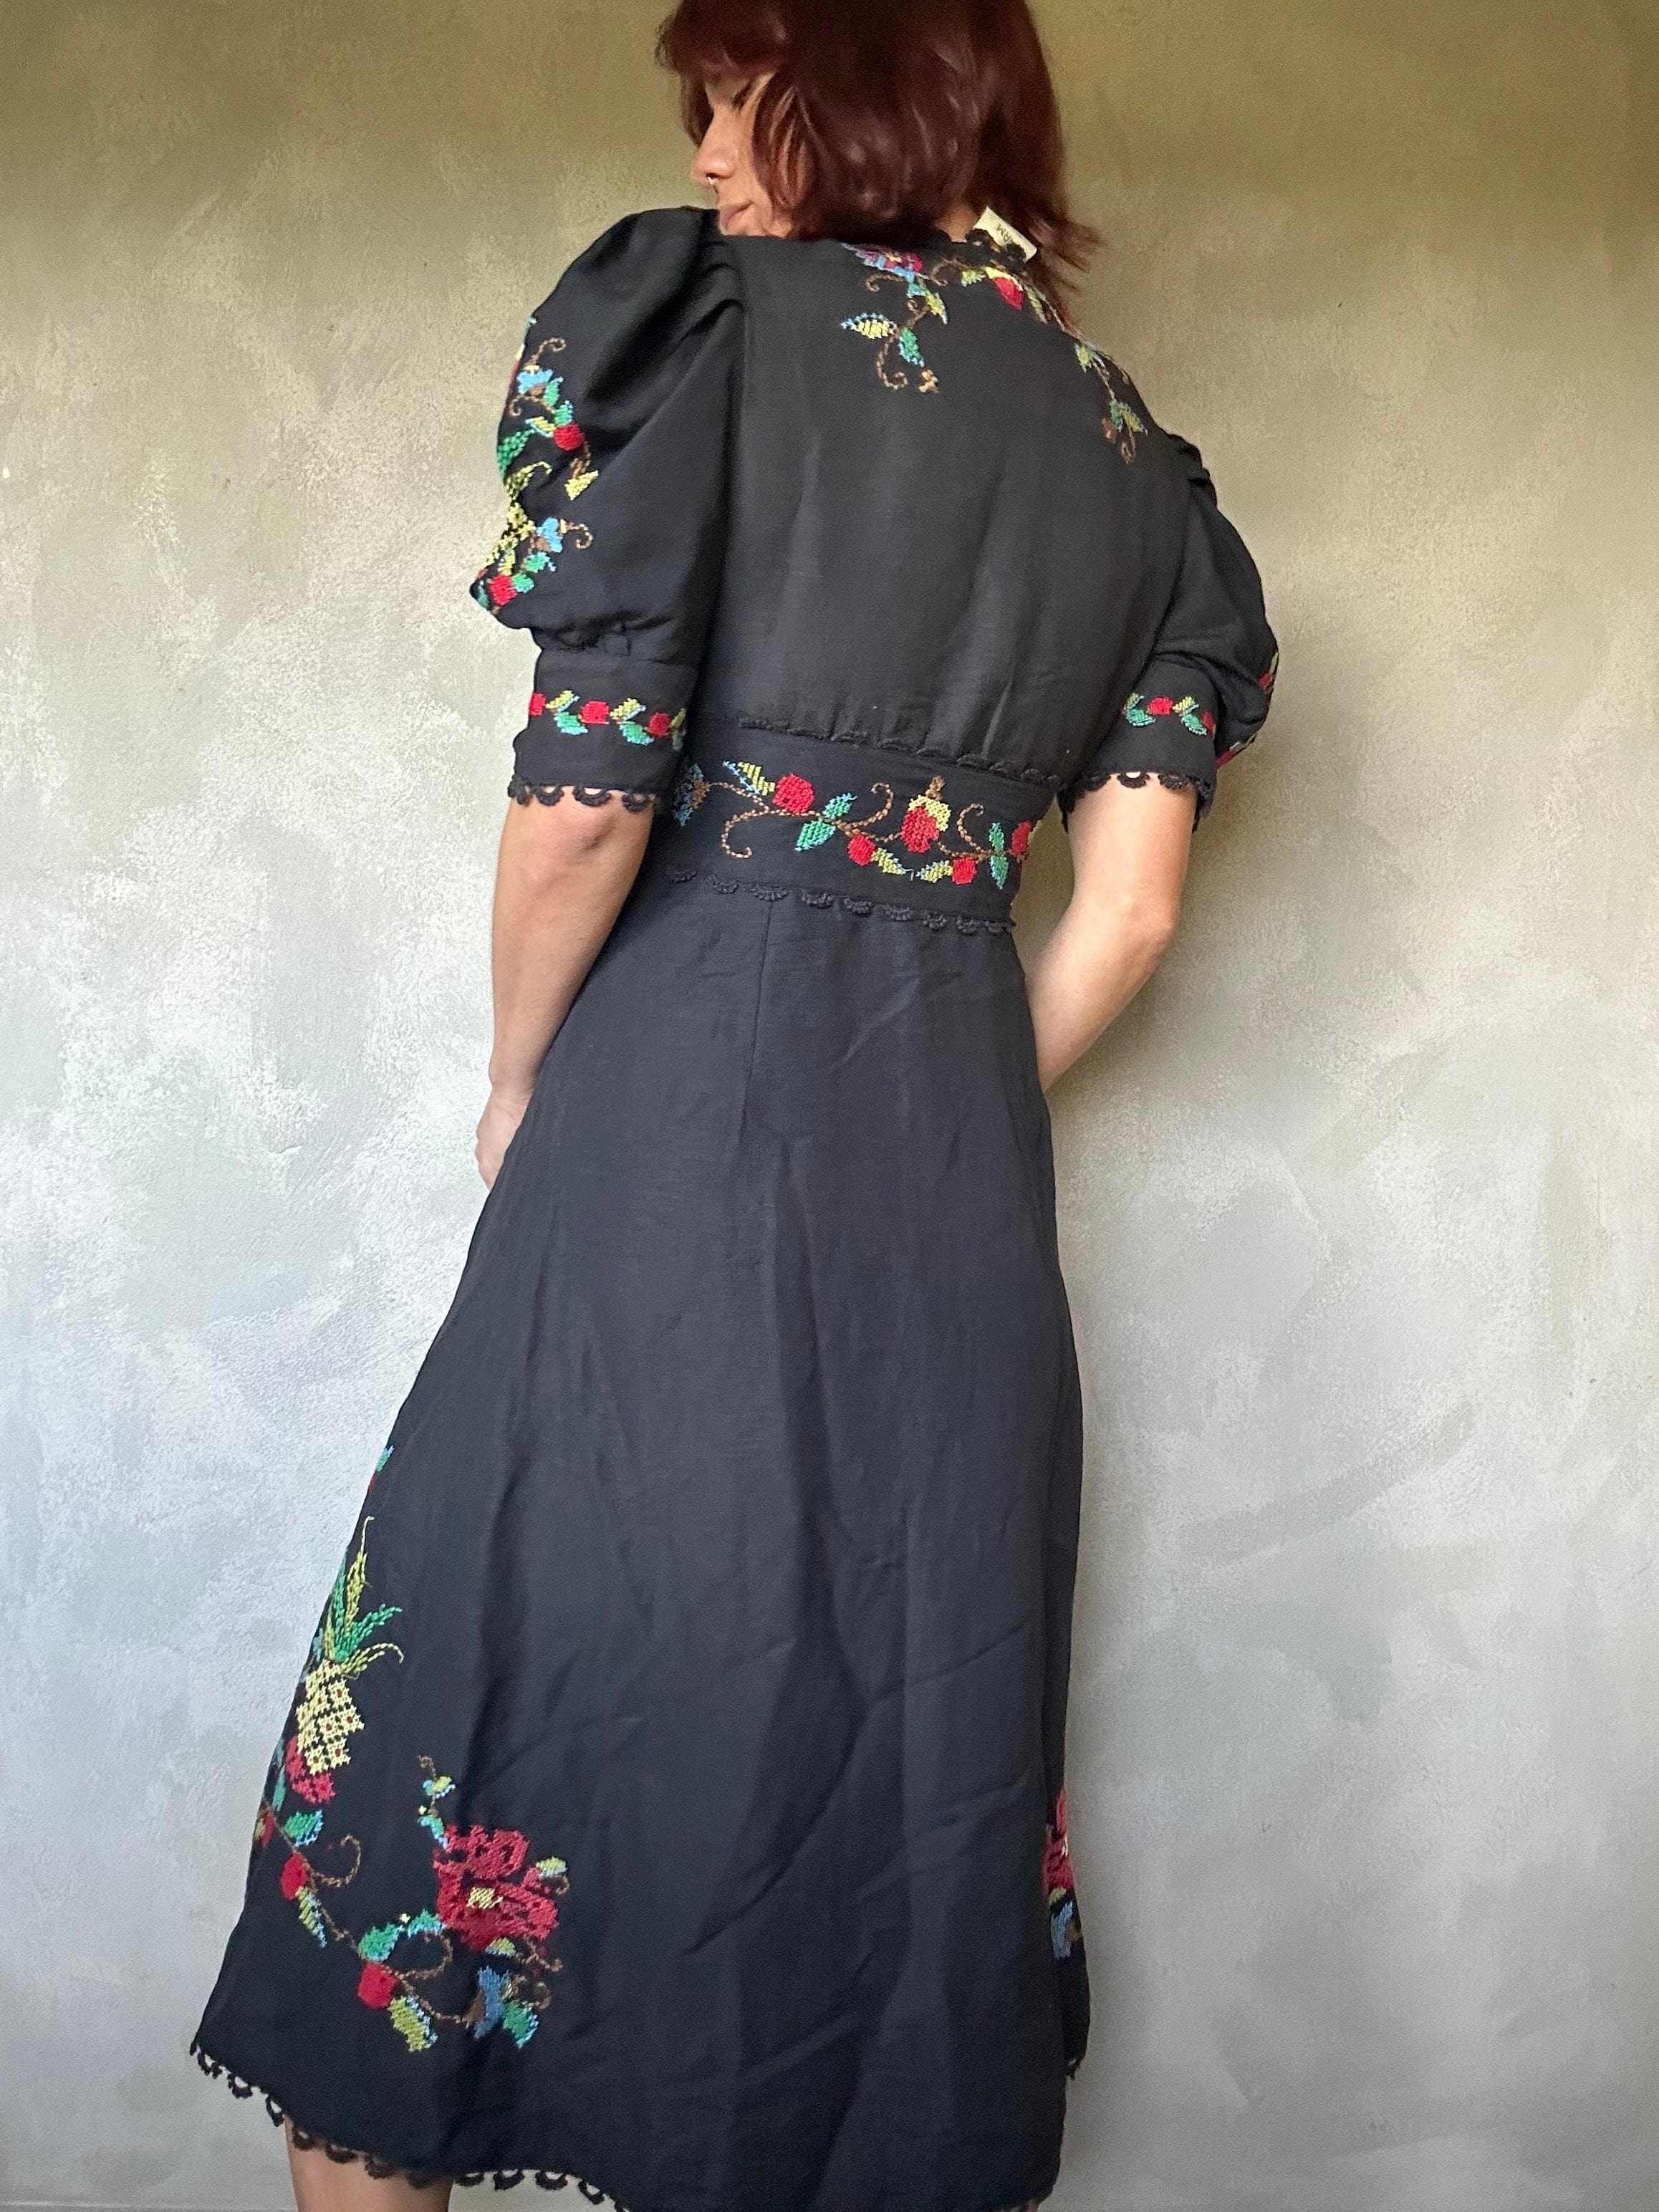 Sistergolden Dress Black Orchard Dress